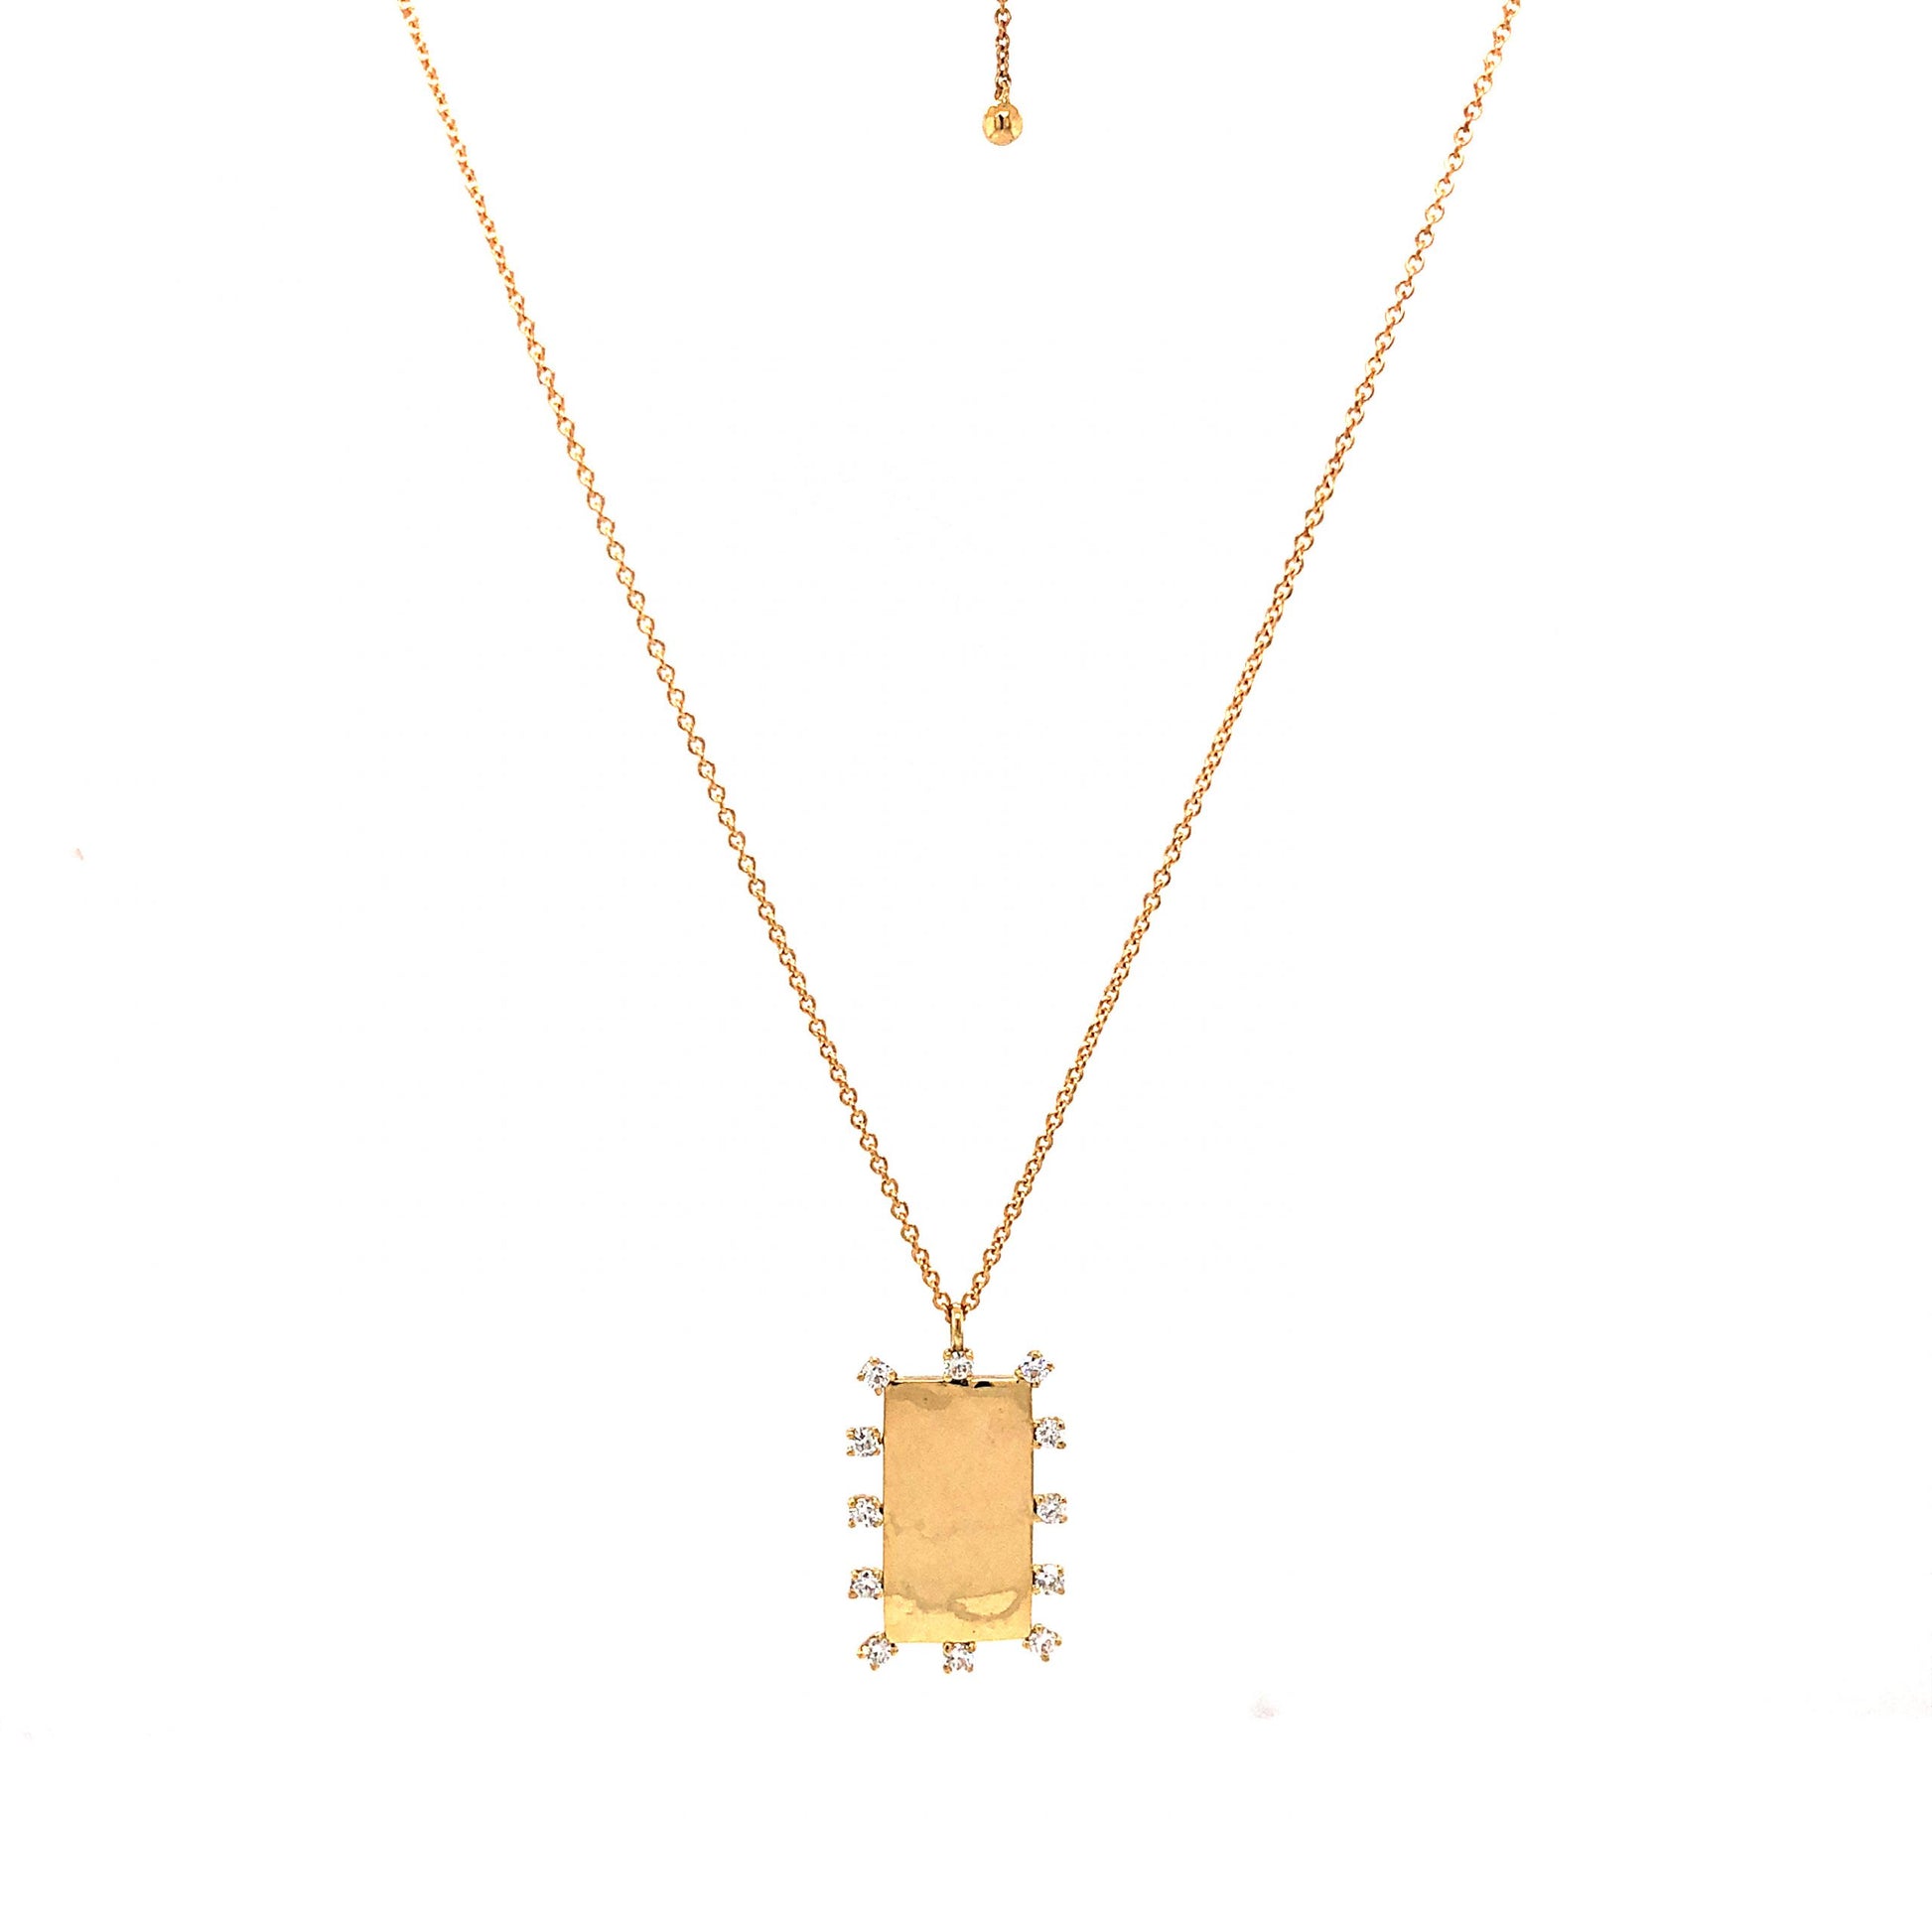 Rectangular Diamond Pendant Necklace in 18k Yellow GoldComposition: 18 Karat Yellow GoldTotal Diamond Weight: .18 ctTotal Gram Weight: 3.0 gInscription: 18k 